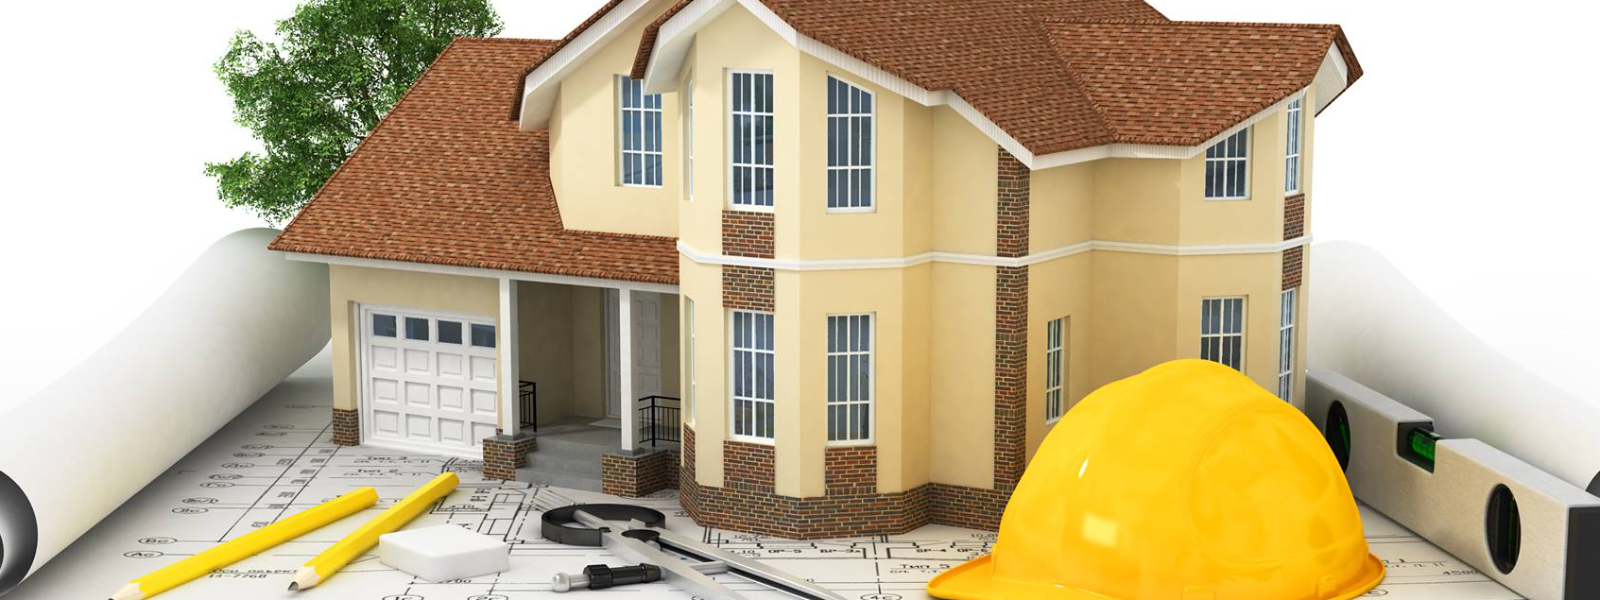 HOME BUILDING OÜ - floor covering services, door installation, Flooring work, General construction, floor installation, i...